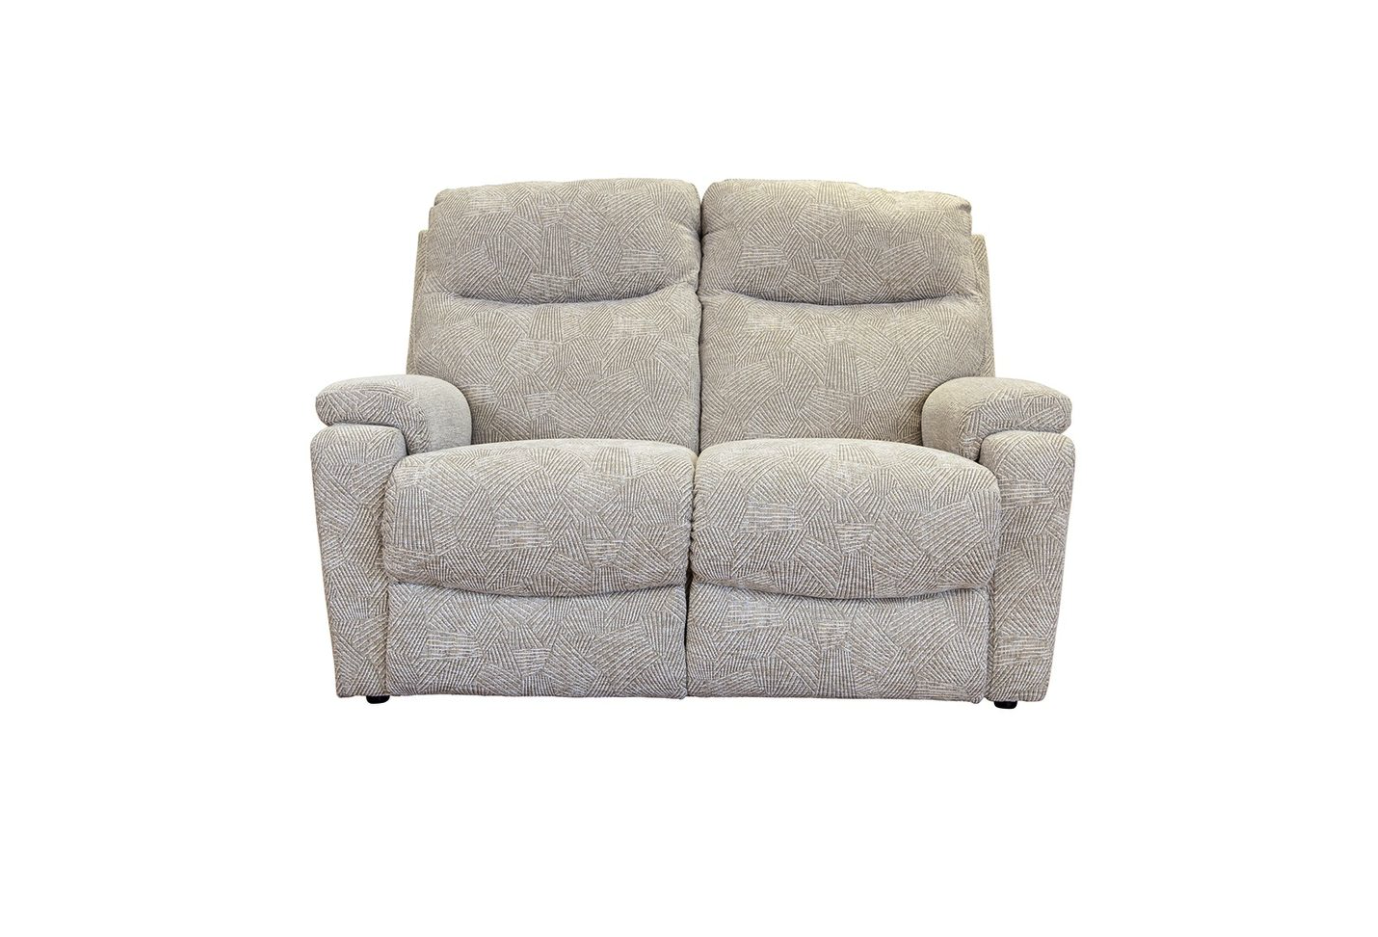 Townley 2 Seater Manual Reclining Sofa